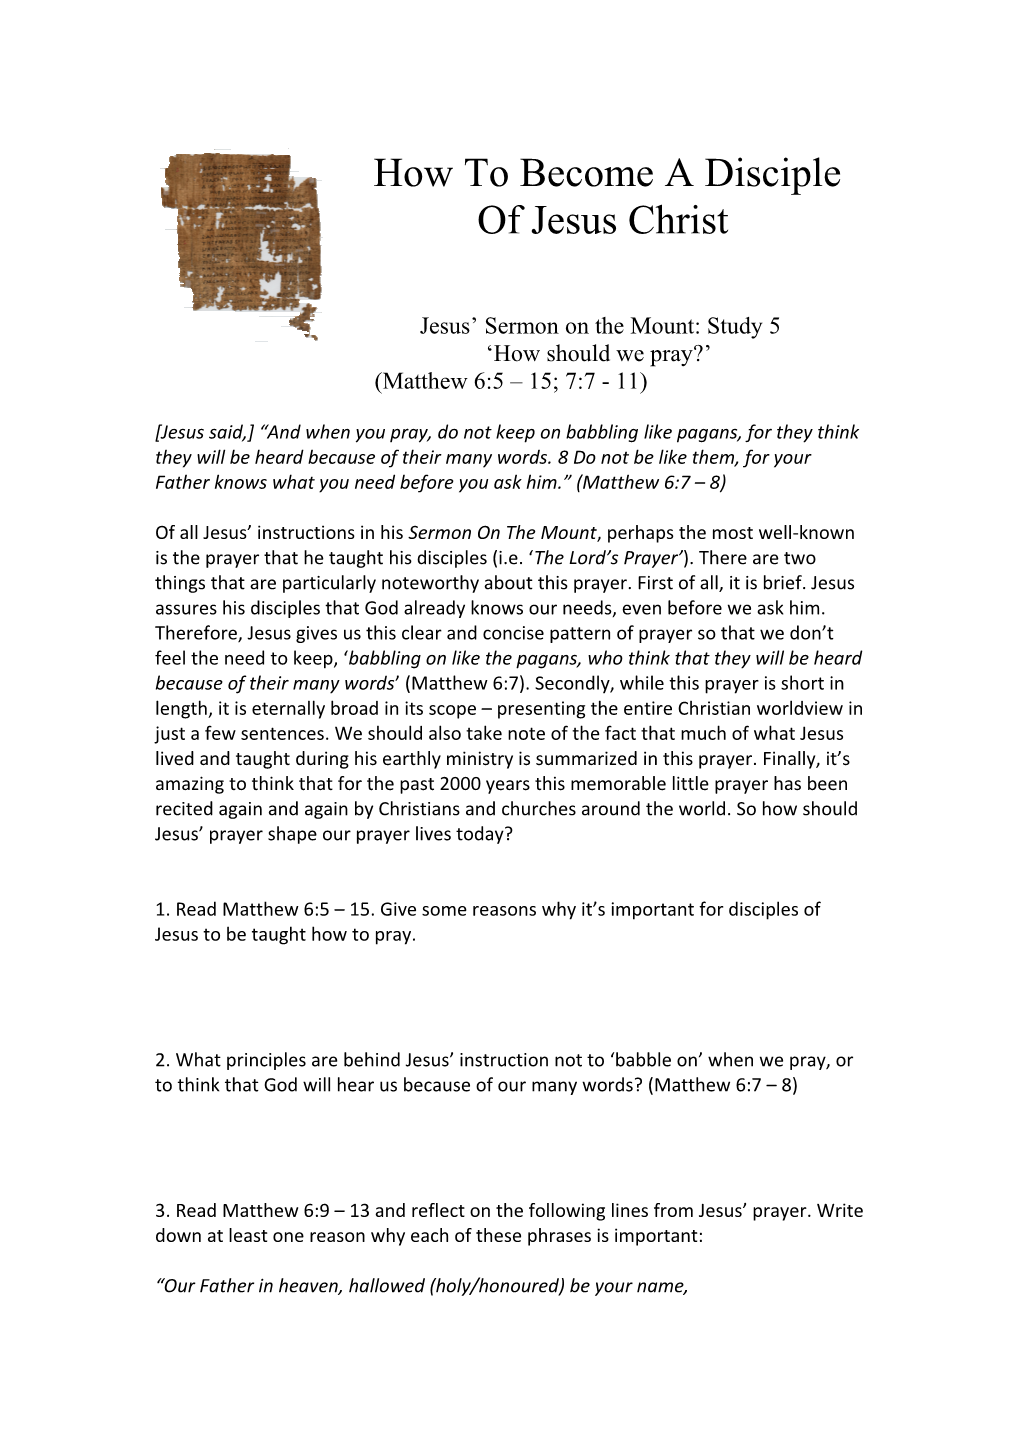 Jesus Sermon on the Mount: Study 5